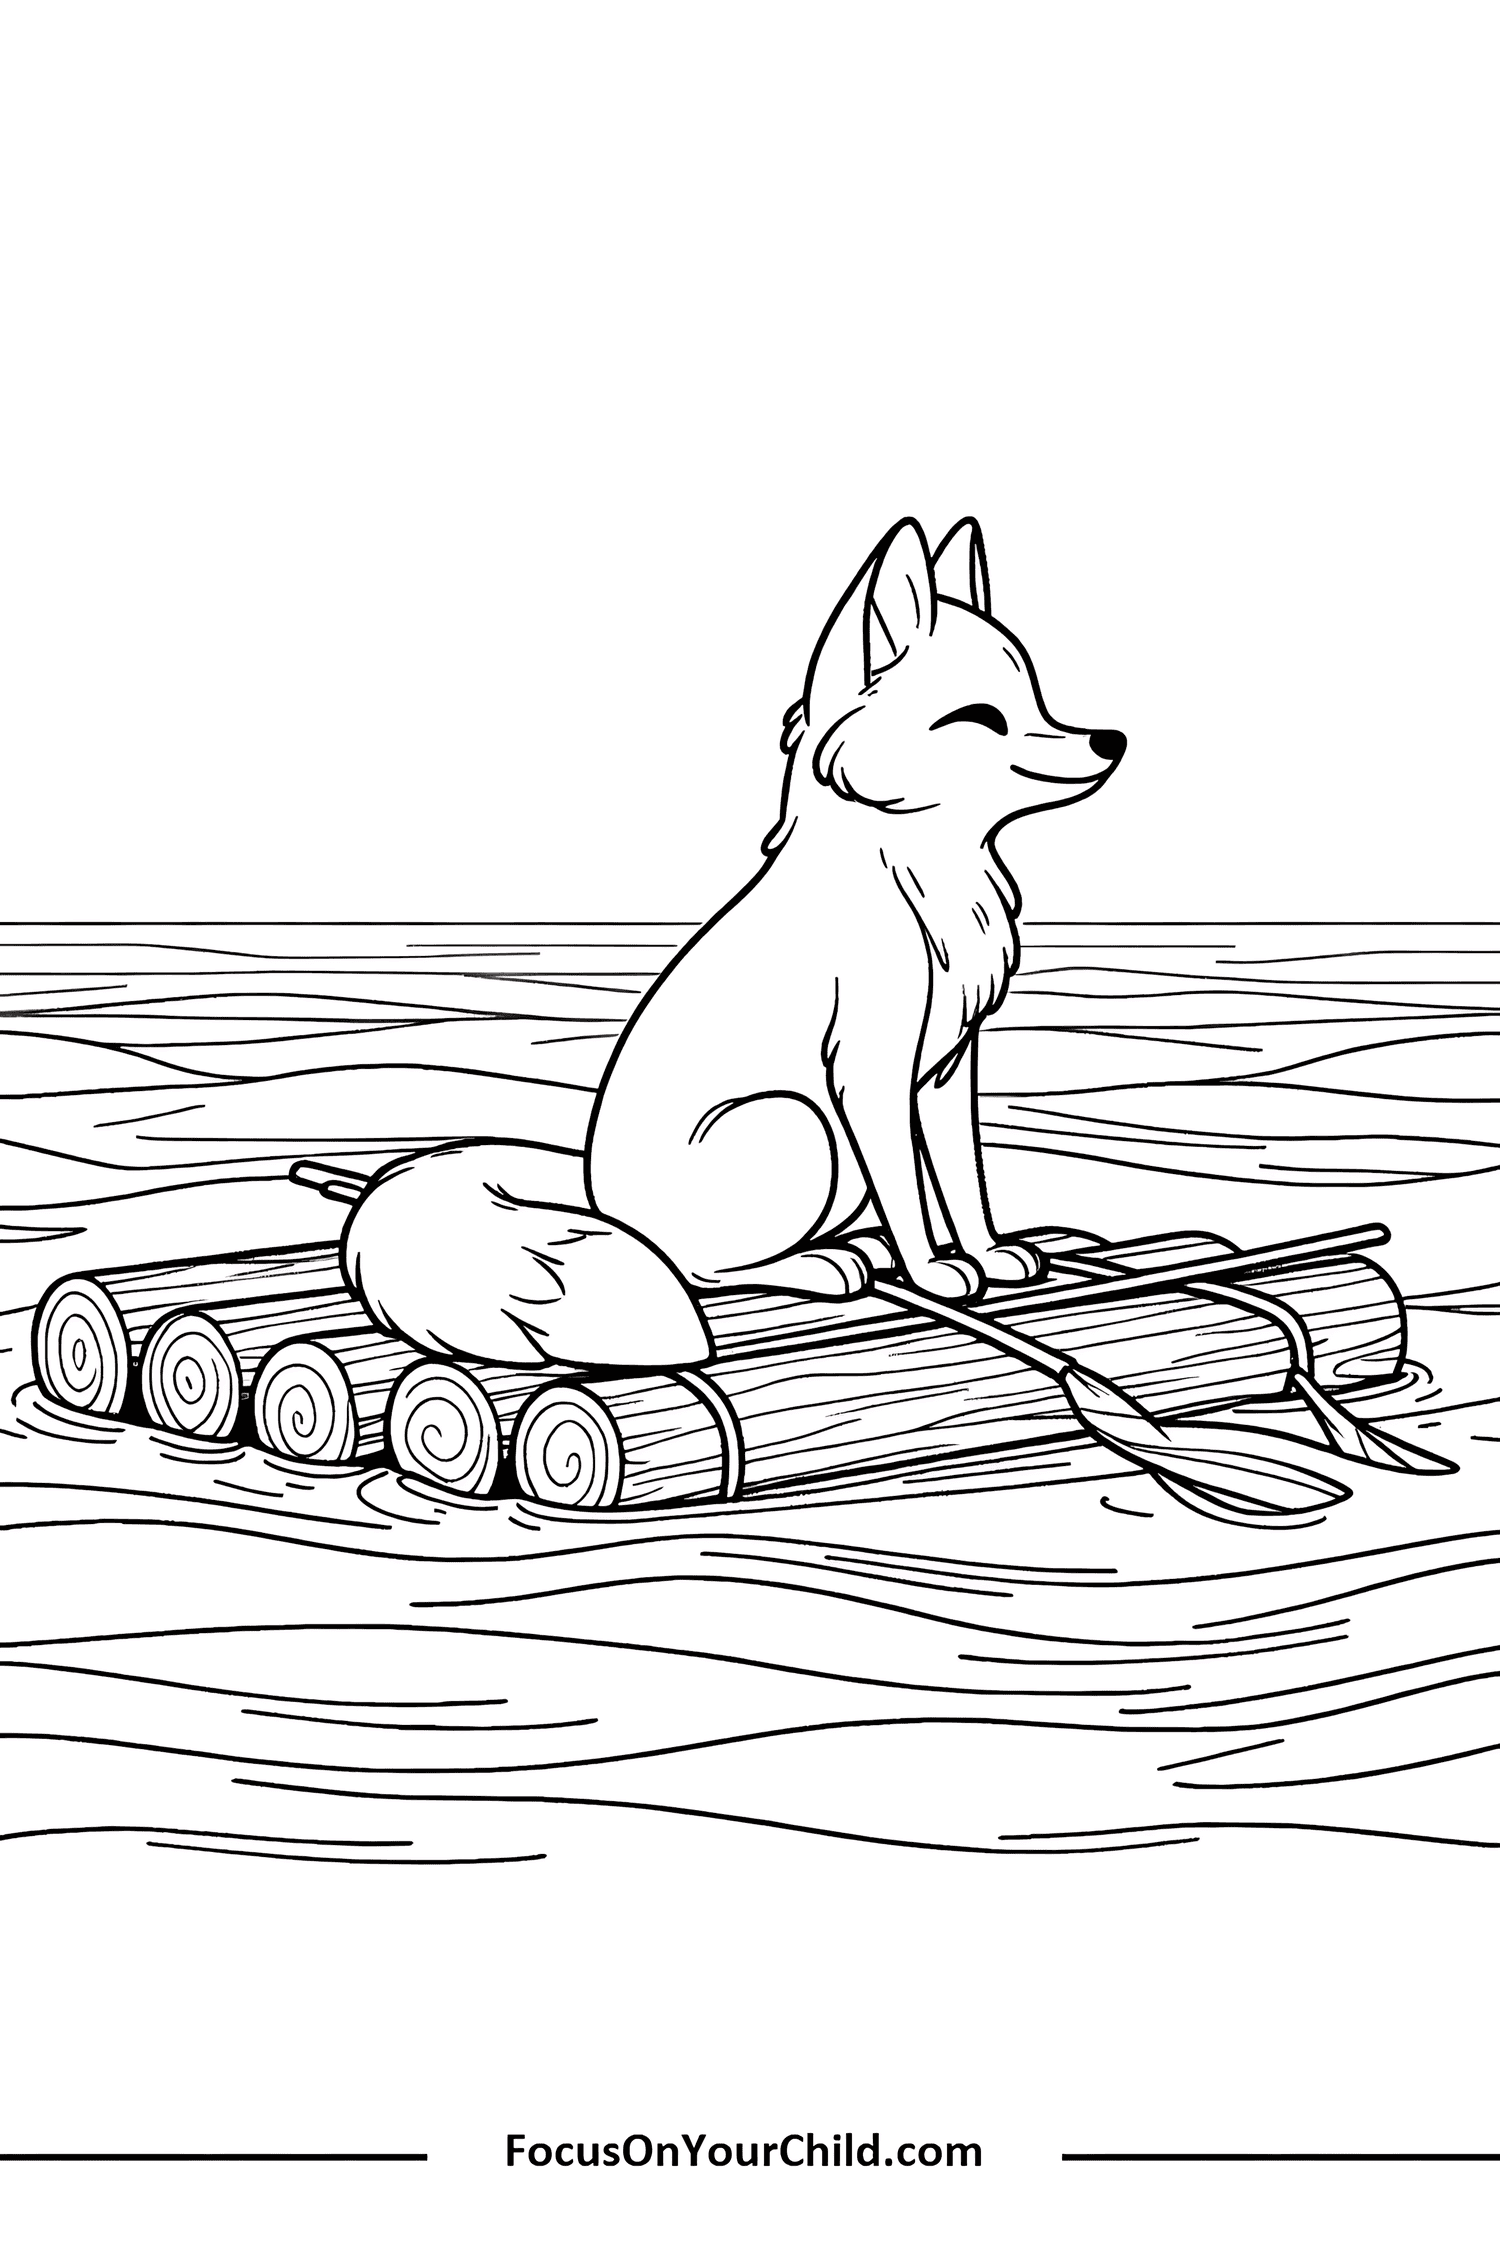 Cartoon fox on raft in calm water, promoting FocusOnYourChild.com.